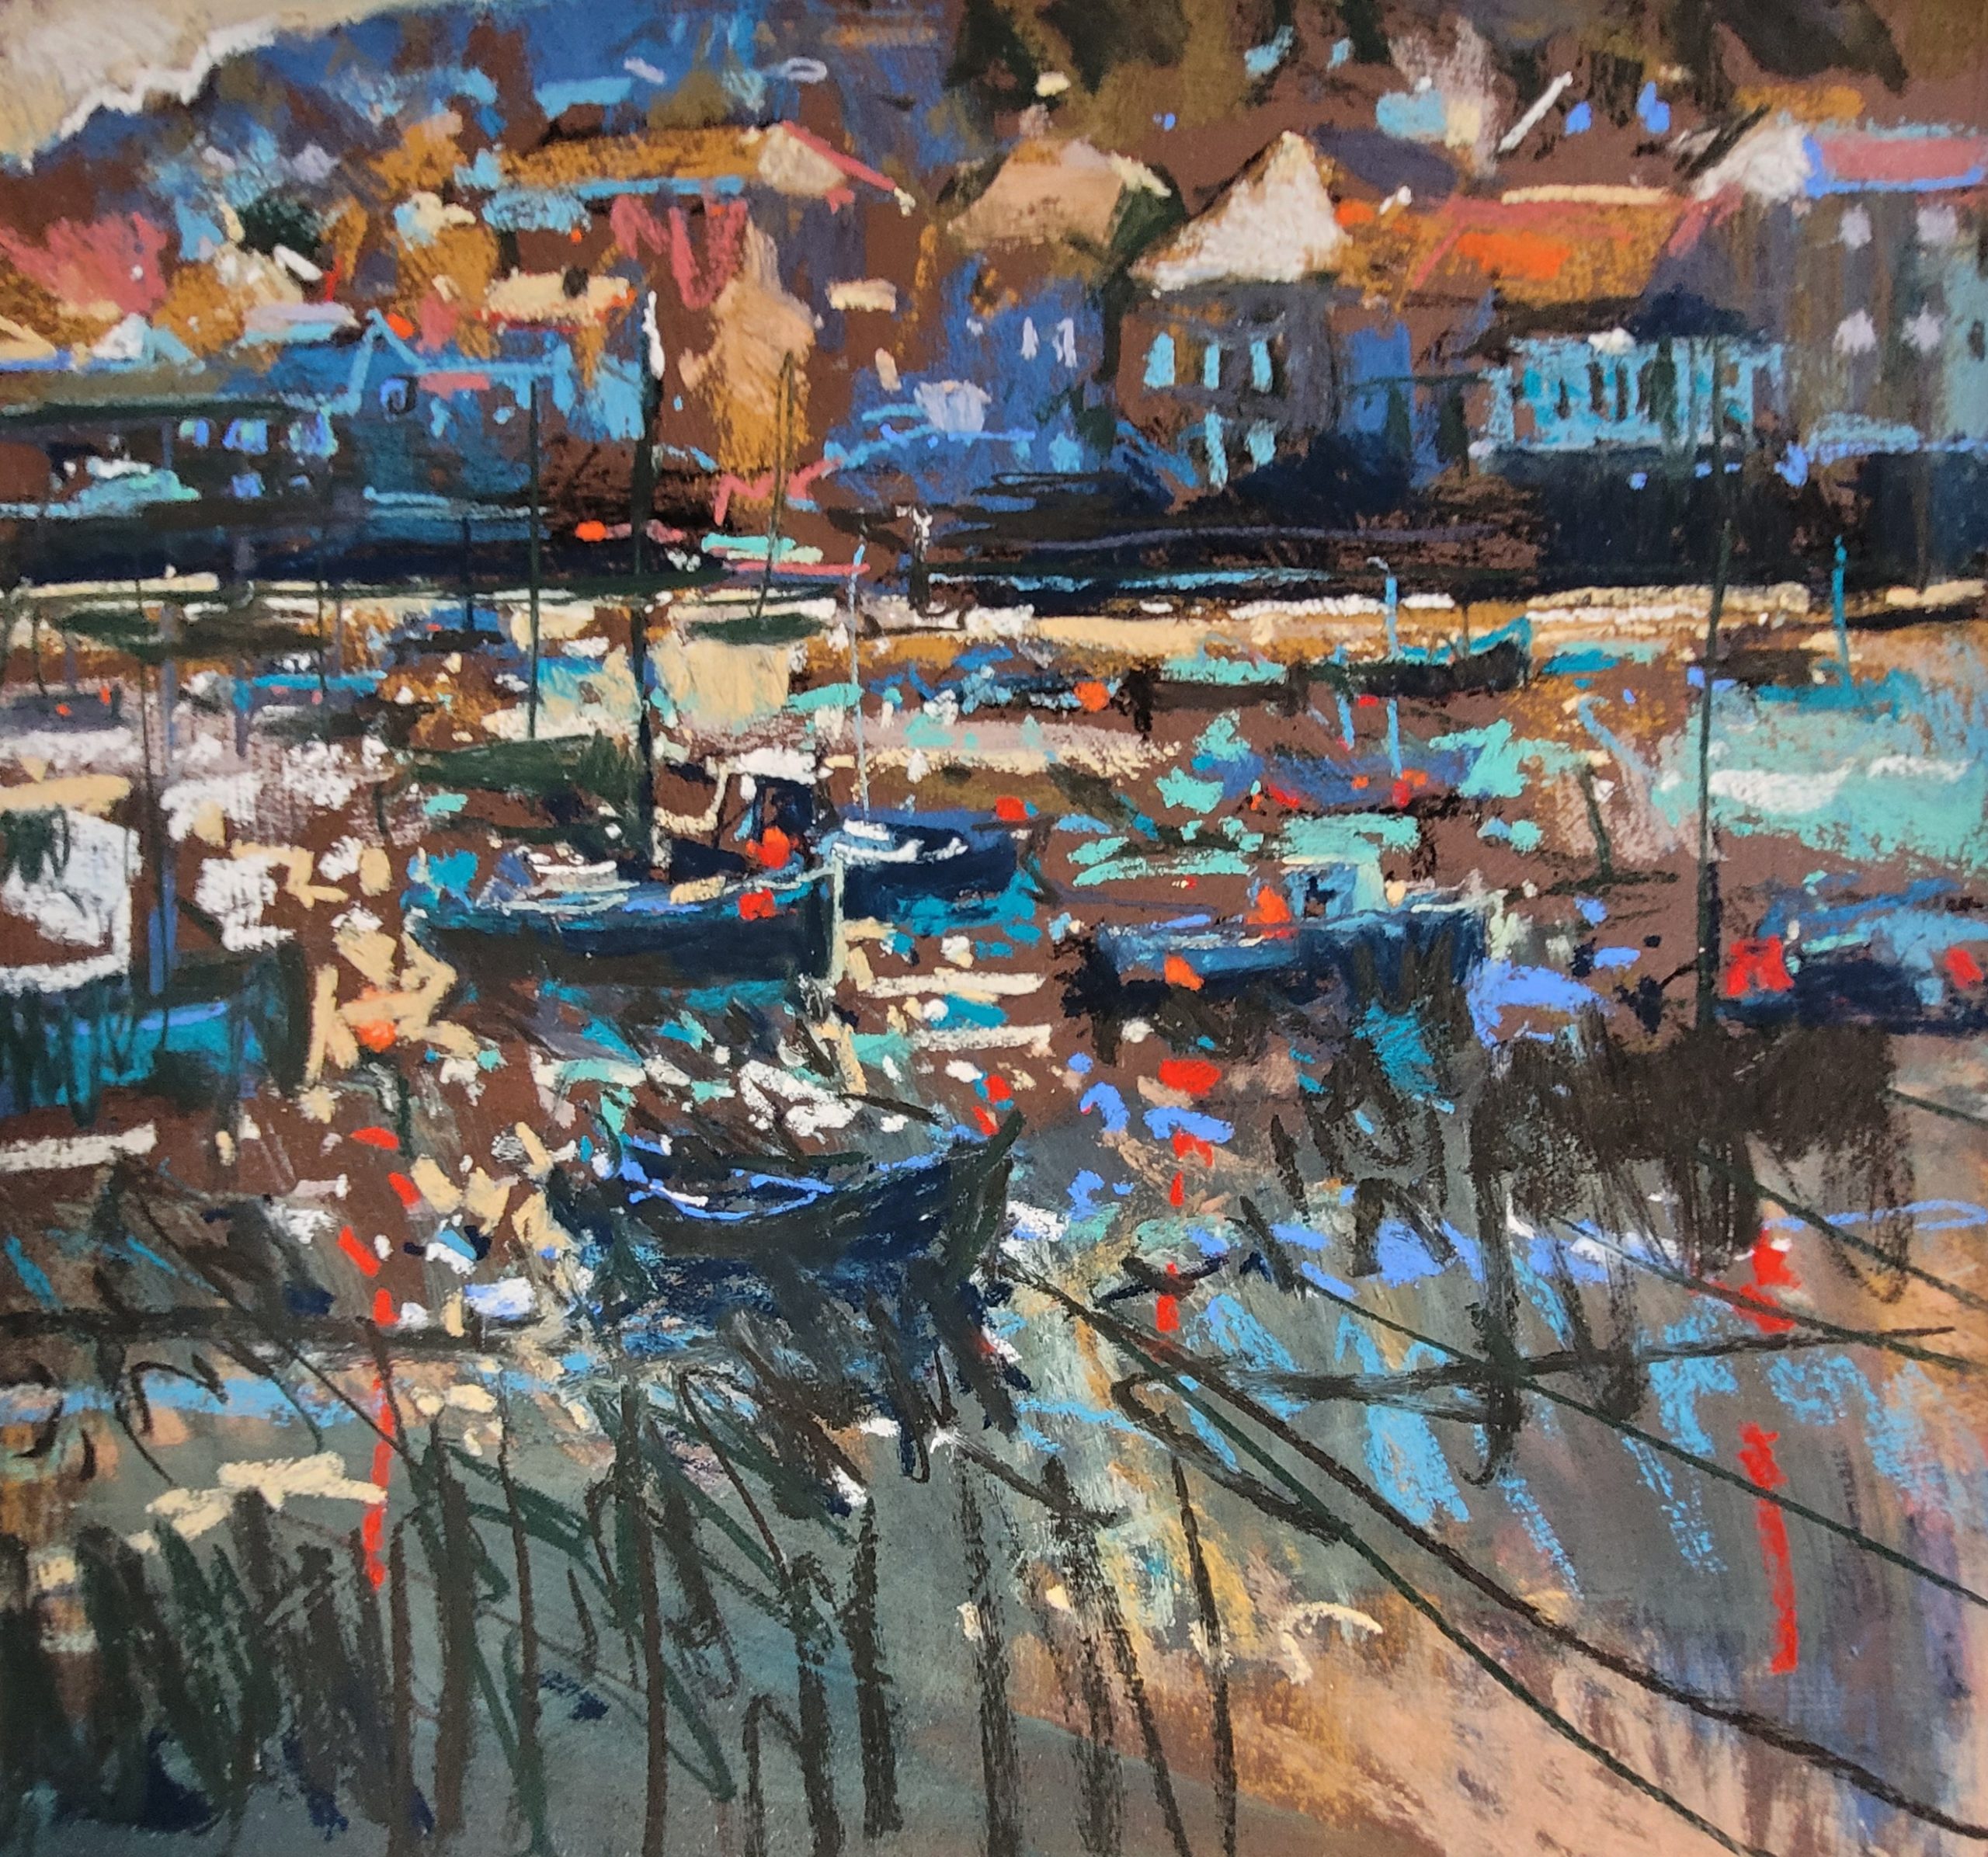 Richard Suckling, "Mousehole Harbour," 2021, pastels on primed board, 23 x 29.5 cm